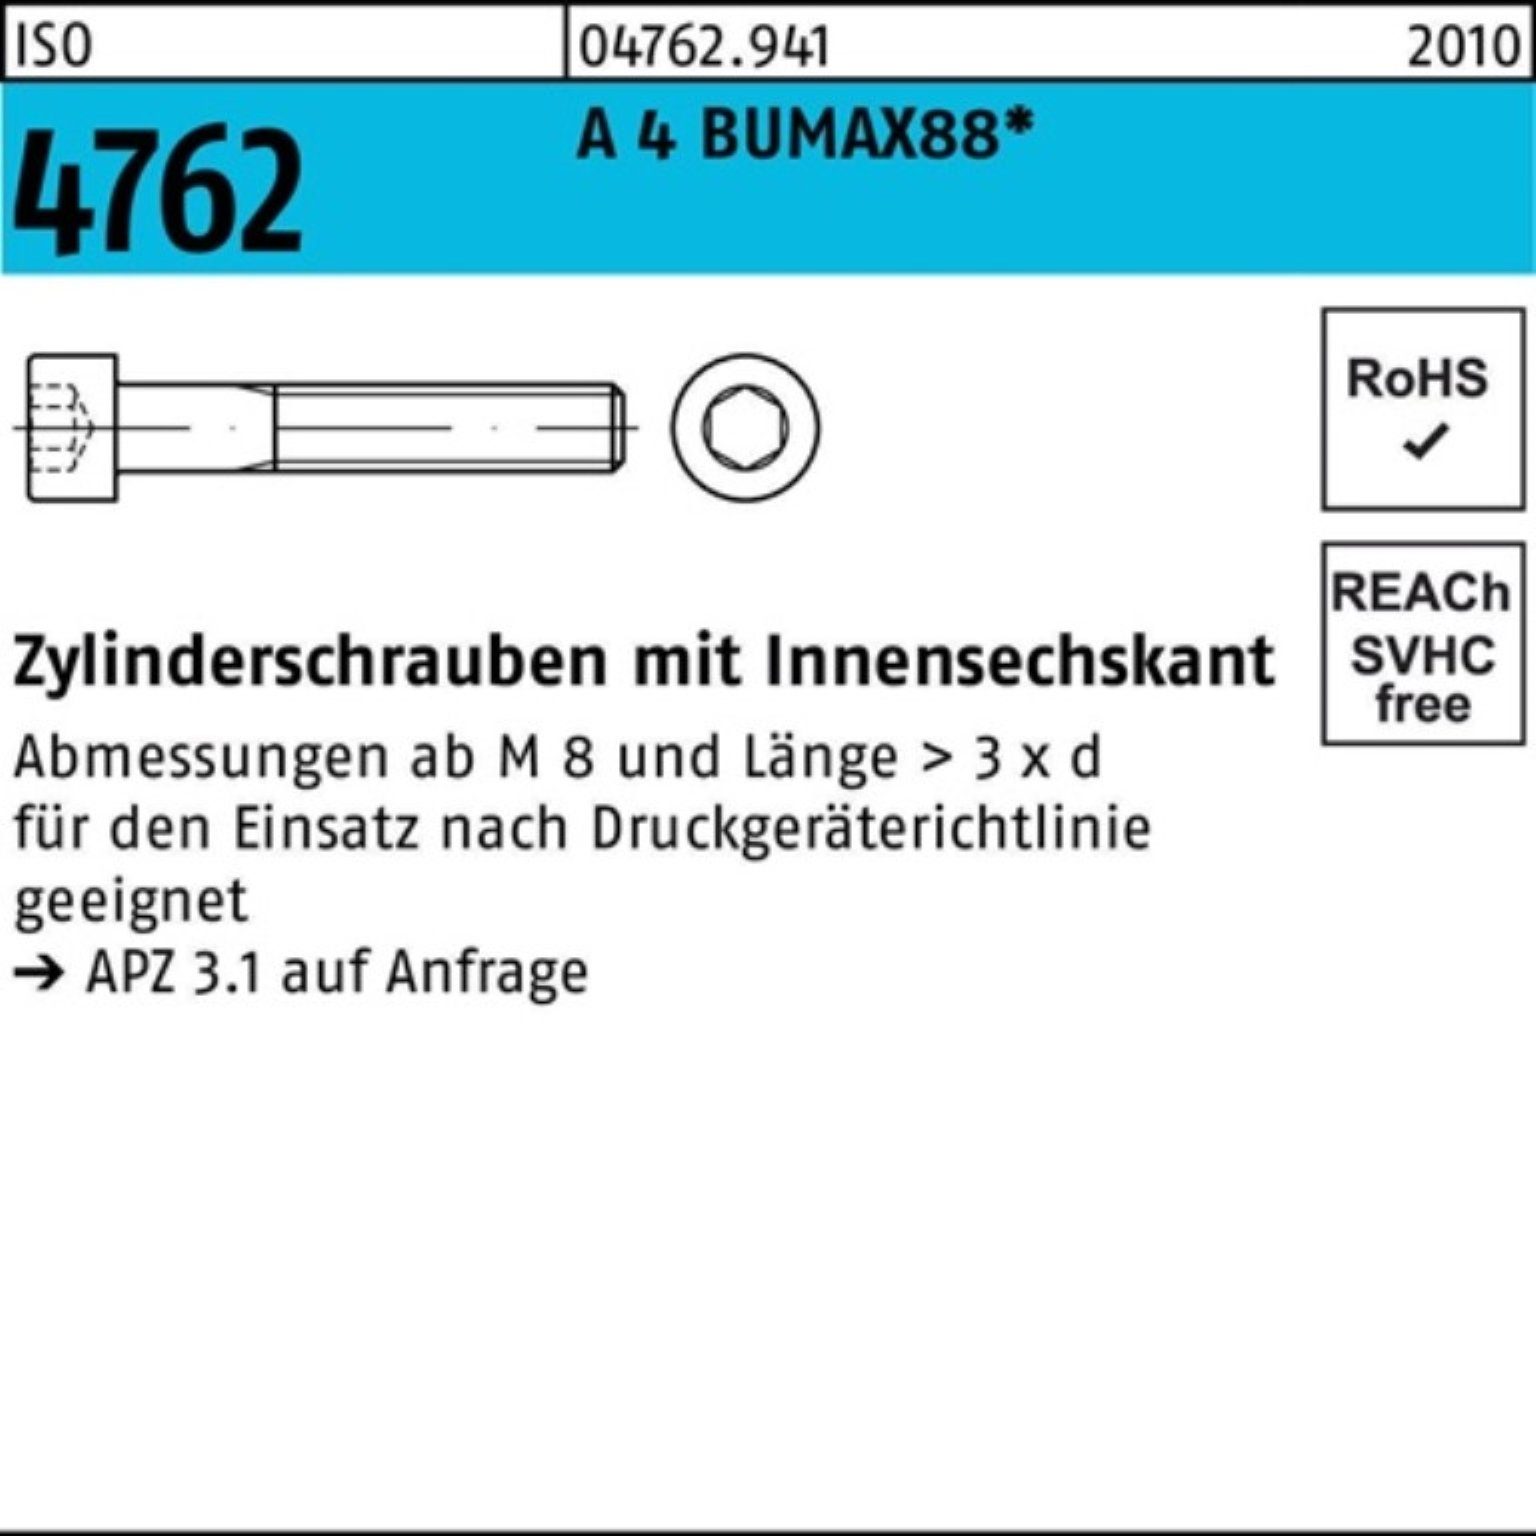 4 BUMAX88 16 Pack 4762 A Bufab 100er Zylinderschraube Zylinderschraube M5x Innen-6kt ISO 100